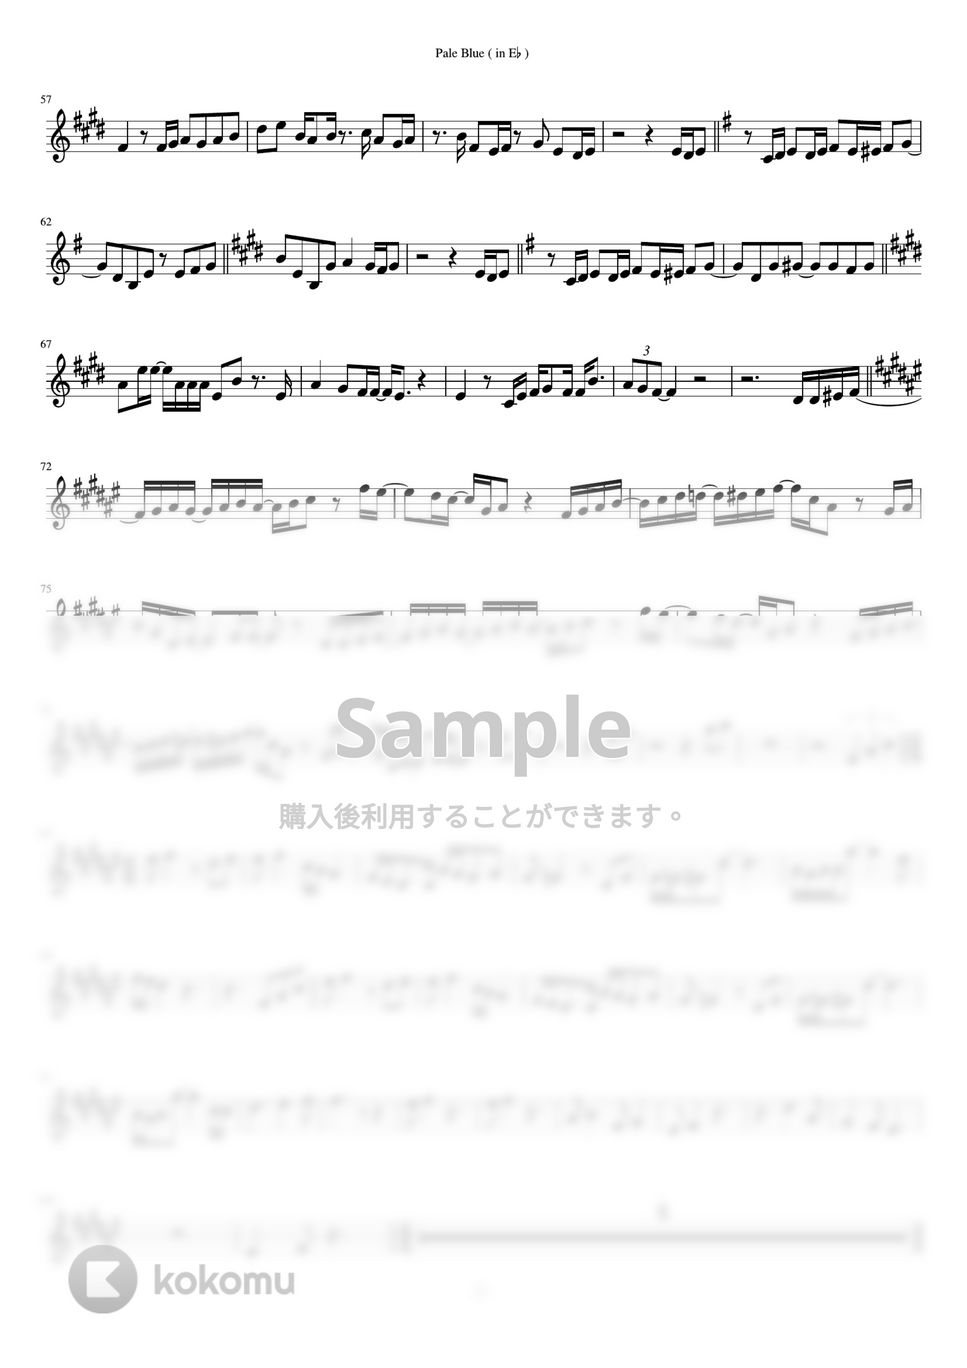 米津玄師 - Pale Blue (in E♭) by inojunCH